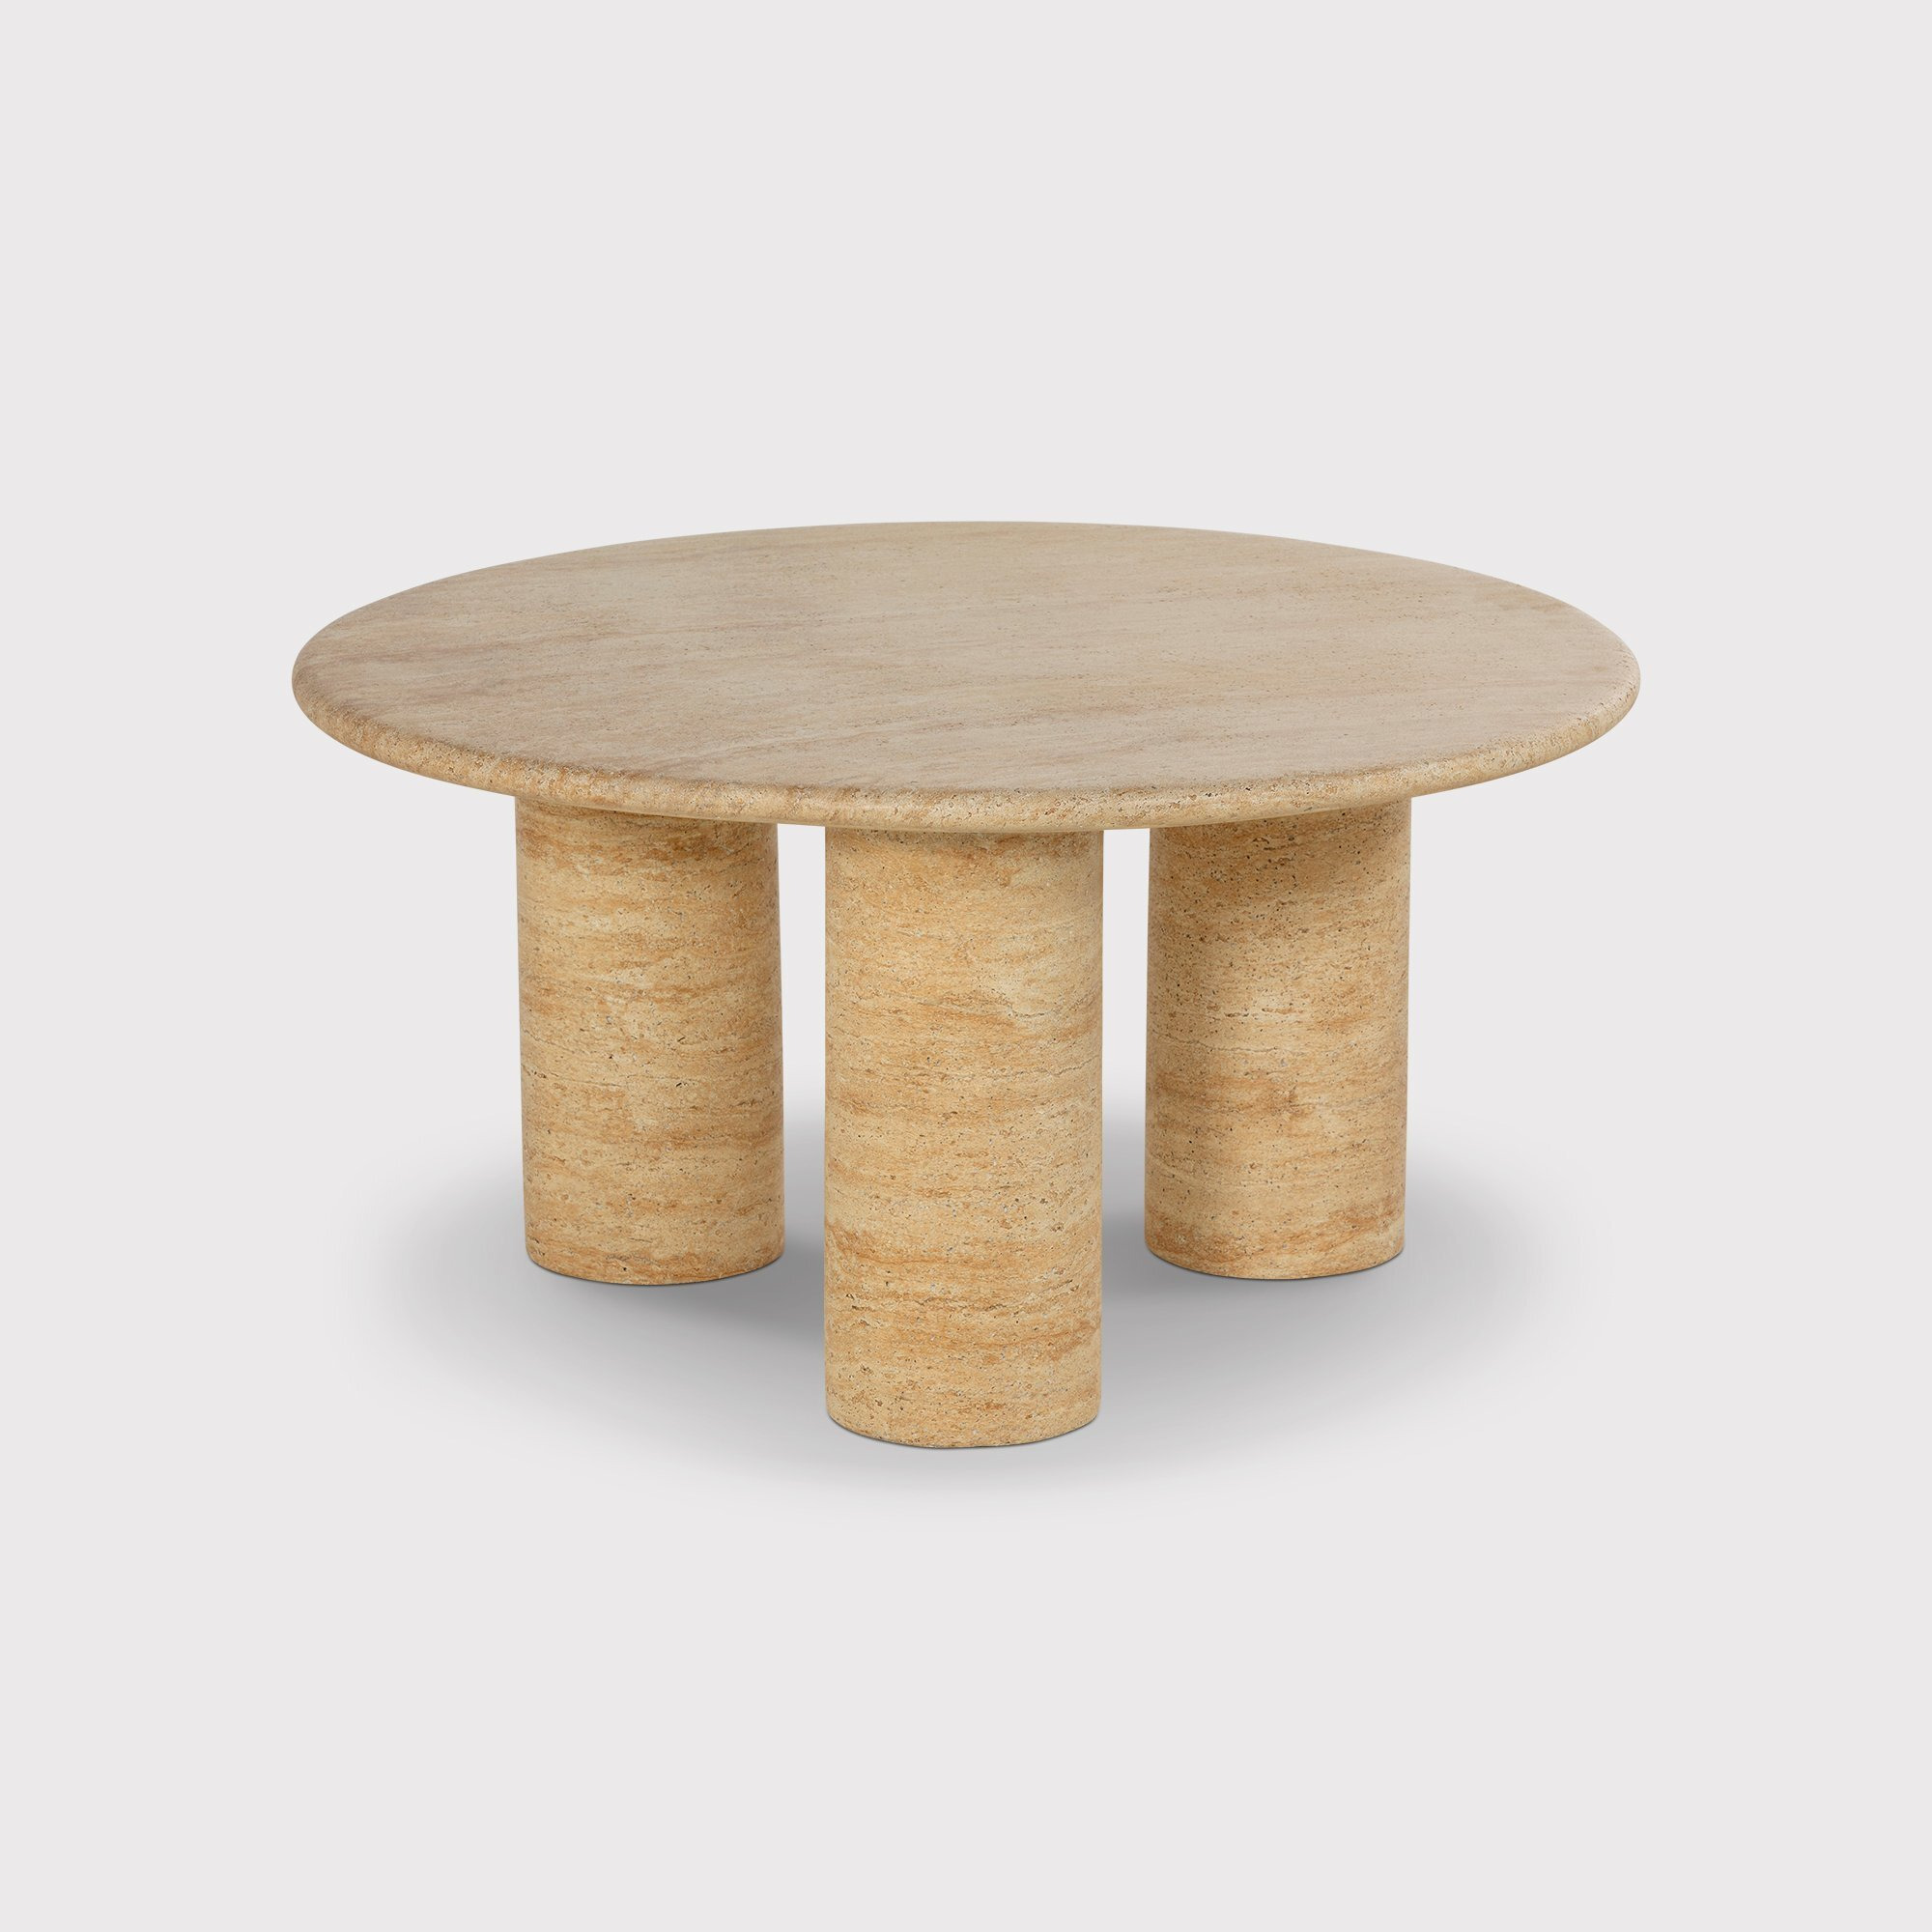 Sierra Round Coffee Table 80cm X 80cm X 41cm, Round, Neutral - Barker & Stonehouse - image 1